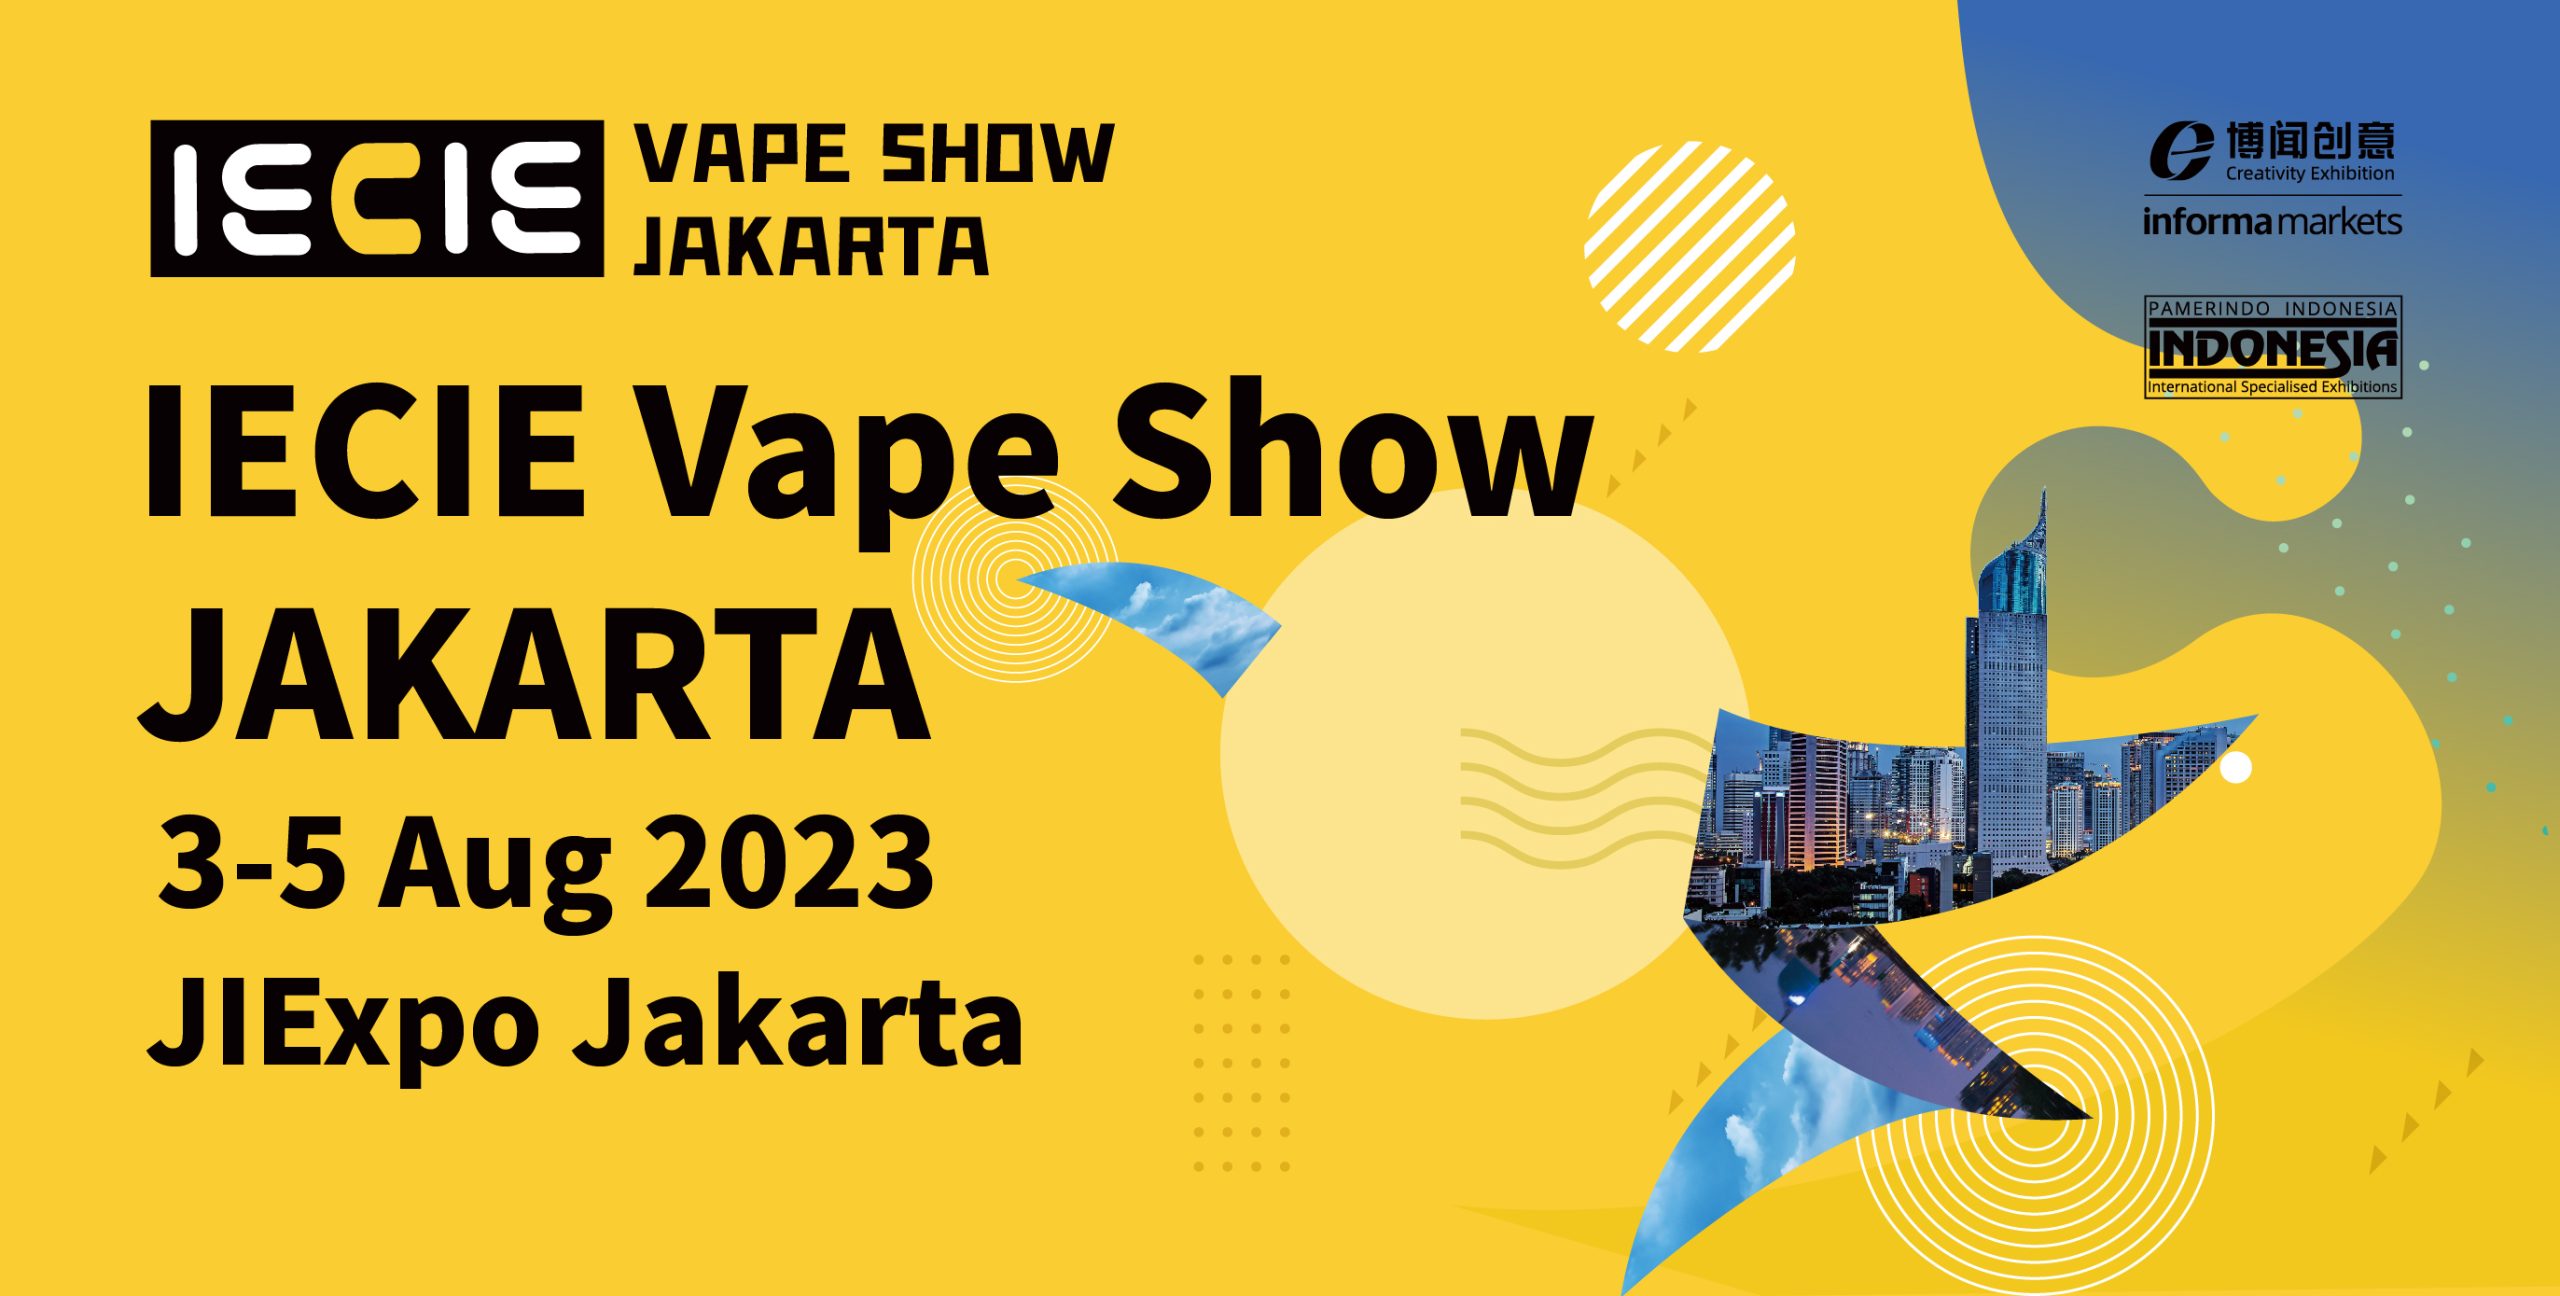 IECIE VAPE SHOW JAKARTA 2023 - JAKARTA XALQARO EXPO